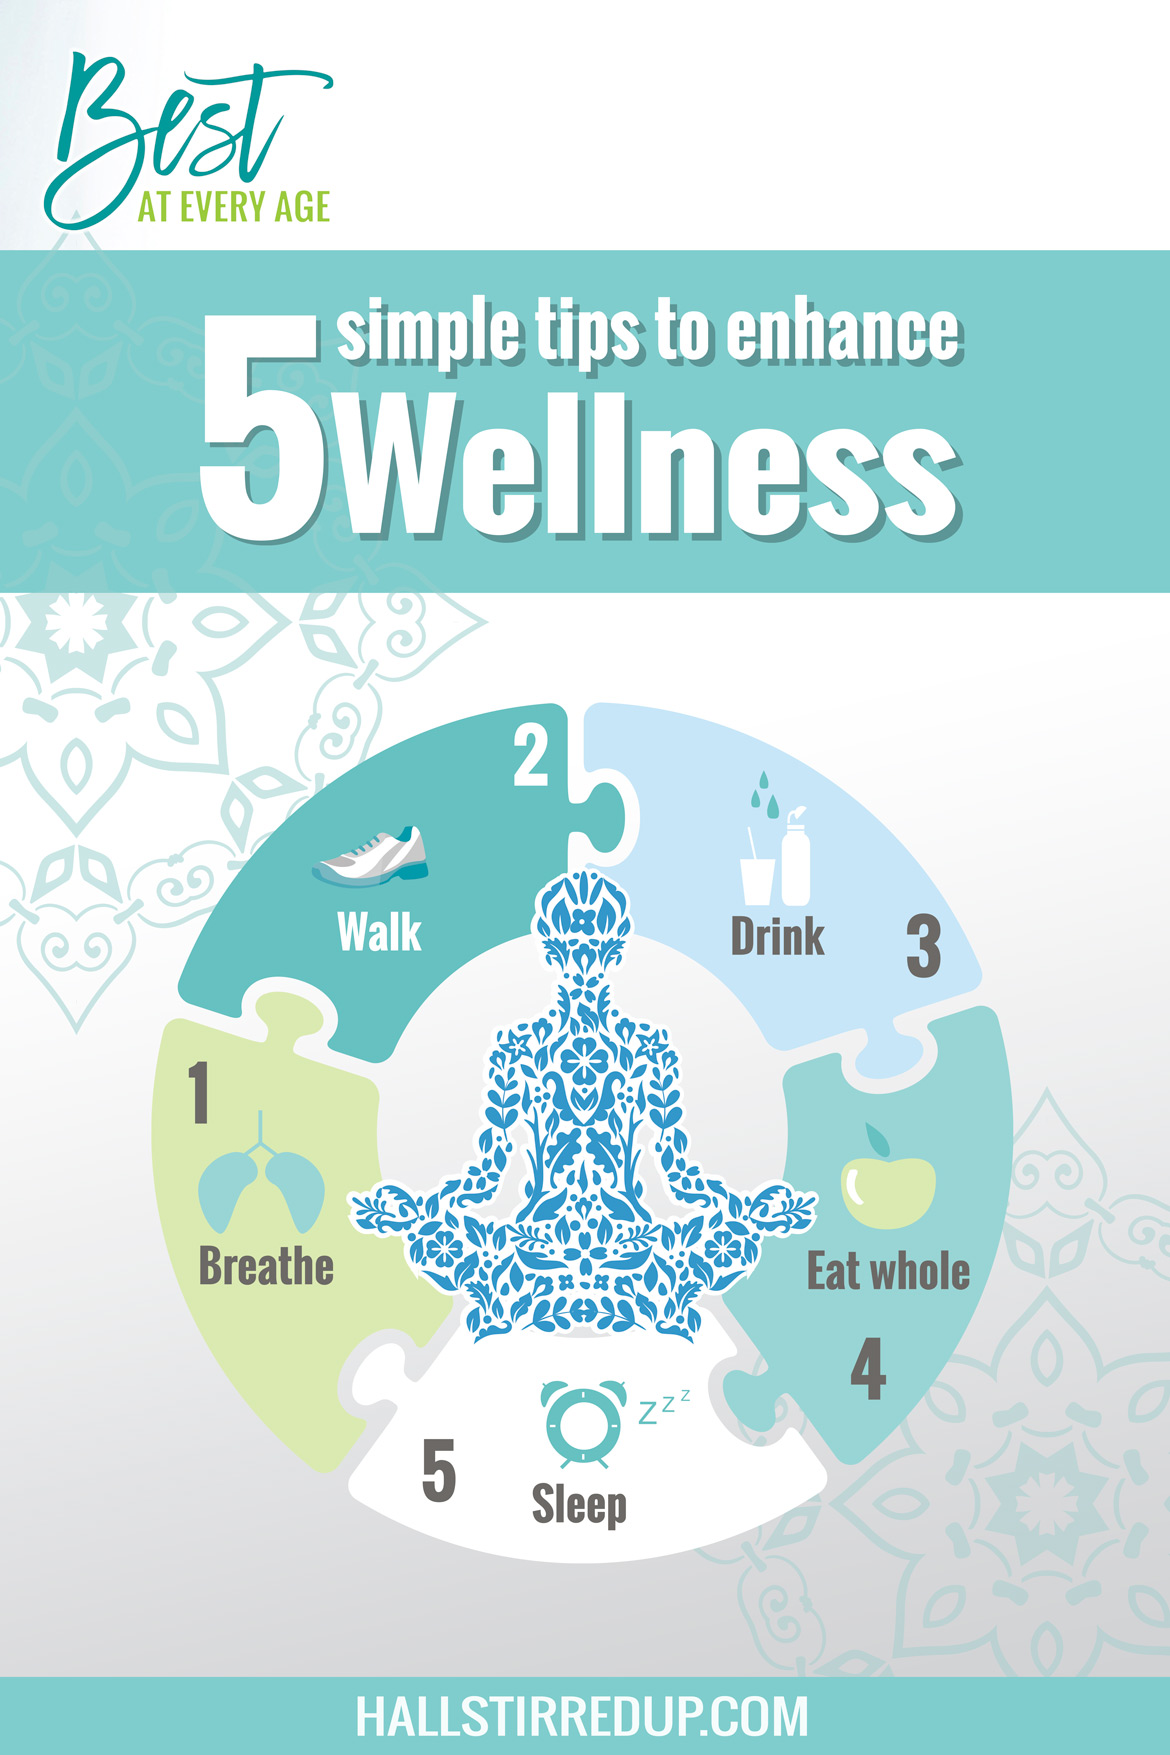 info graph showing 5 tips to enhance wellness